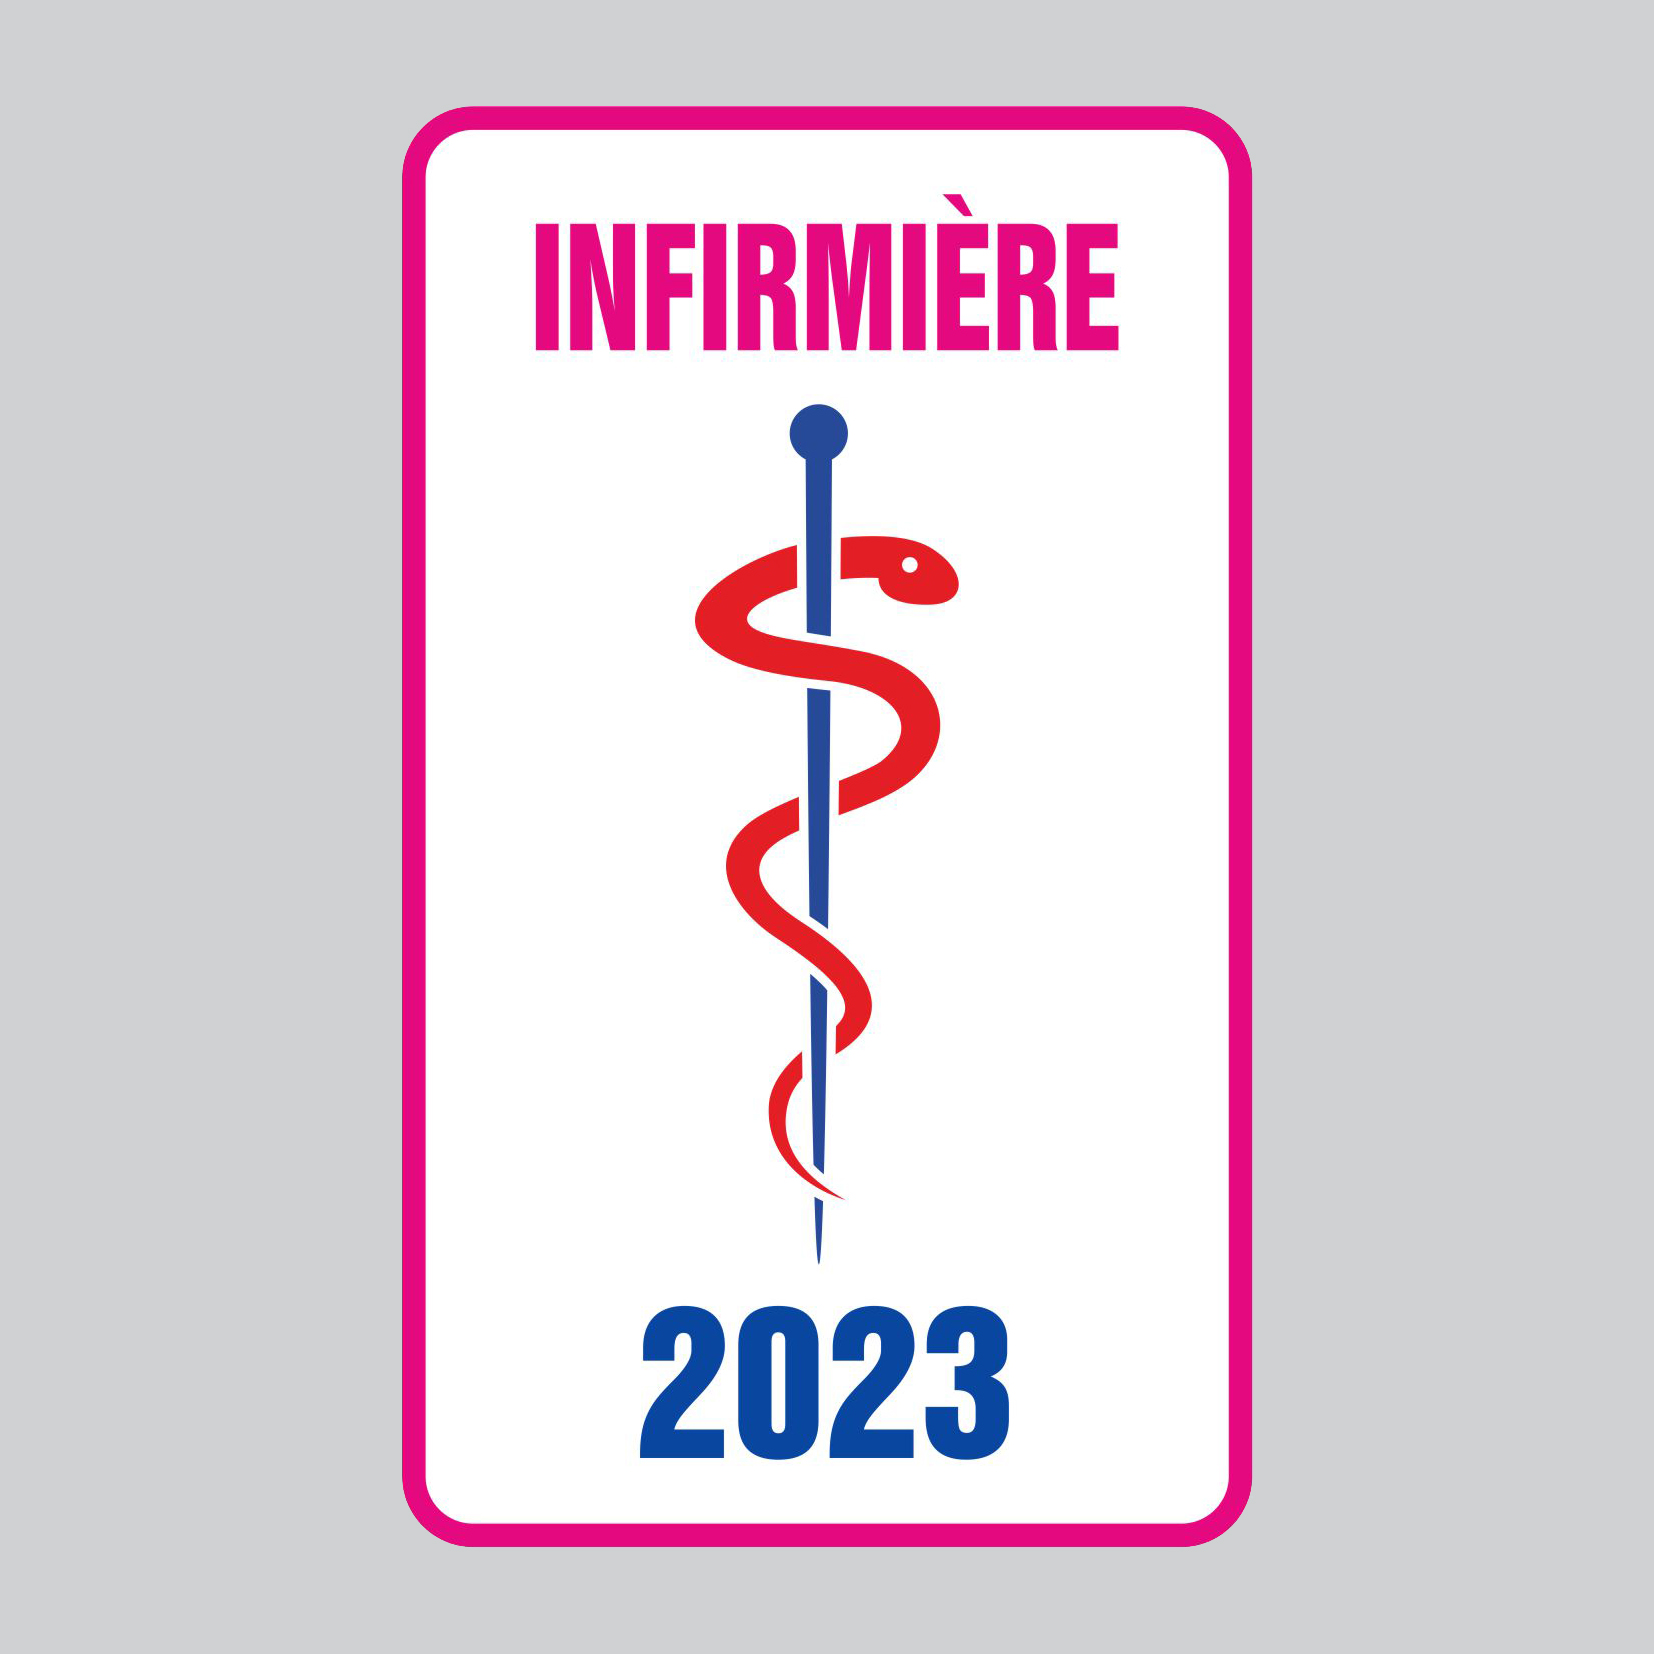 Caducée Vitrophanie Infirmière 2024, Multipub